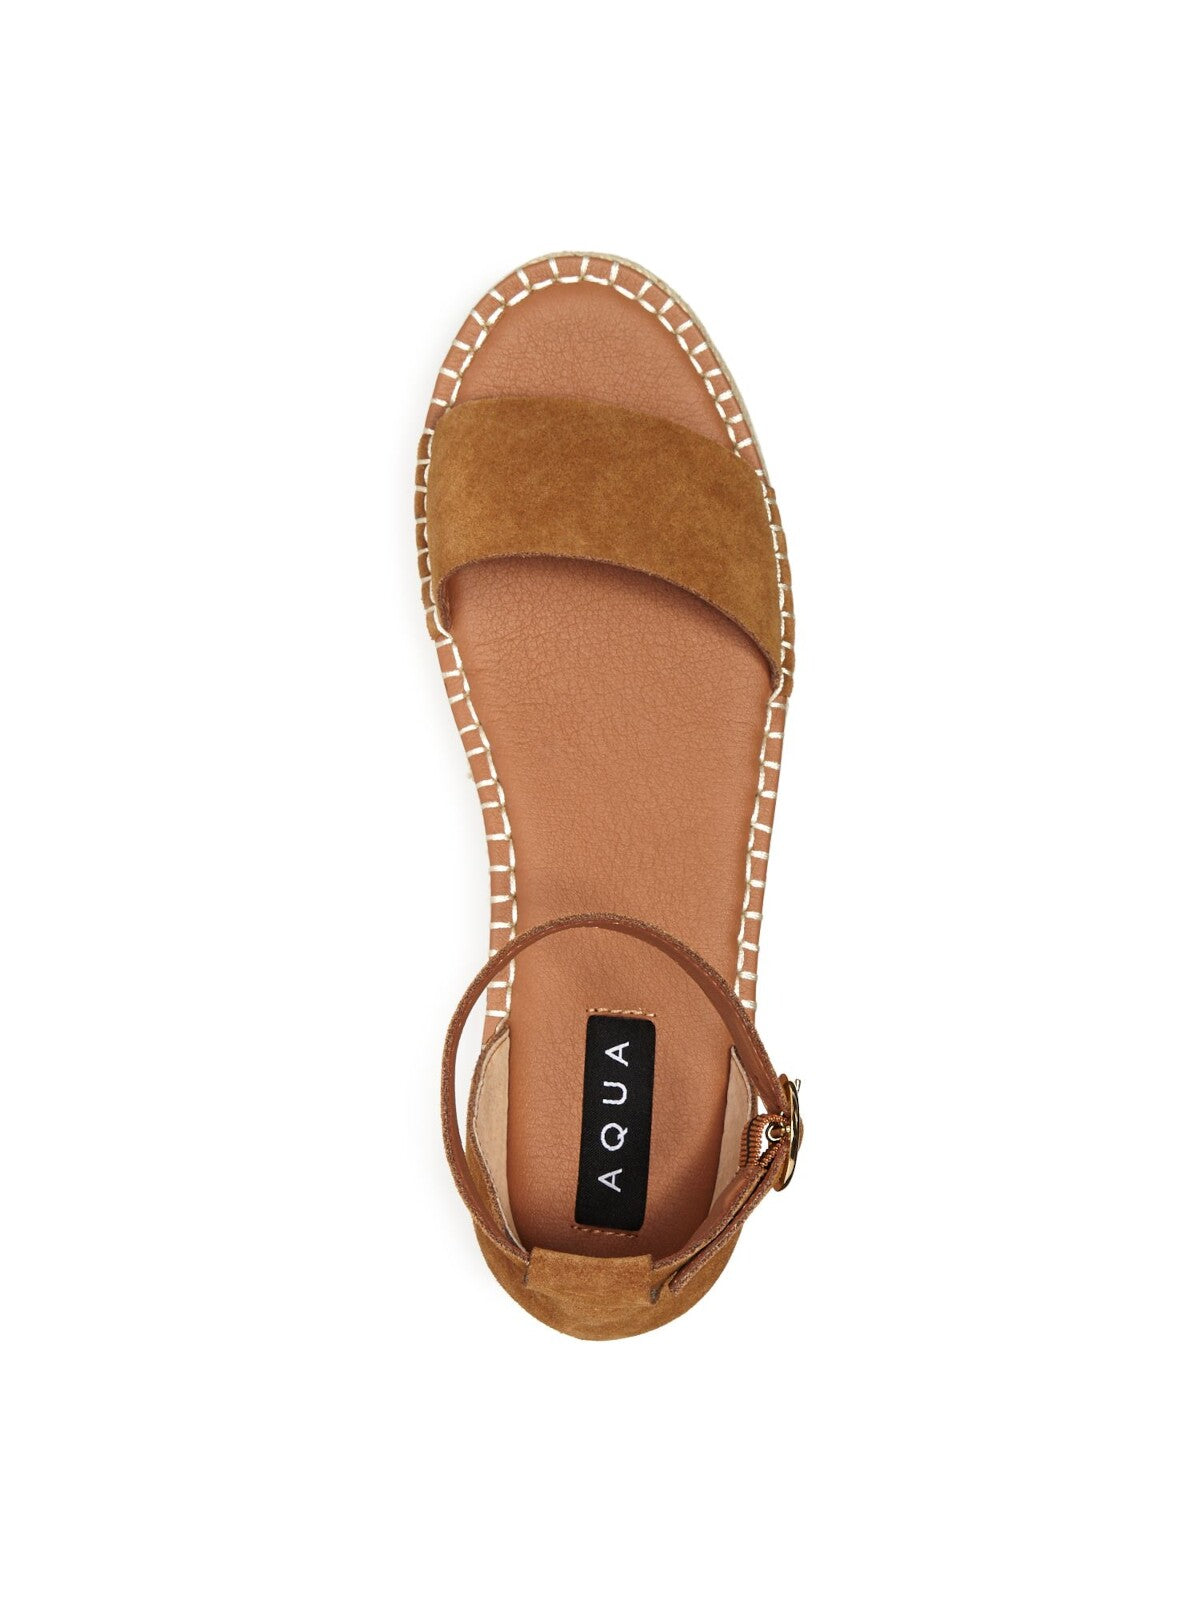 AQUA Womens Brown 1-1/2" Platform Stitch Detailing Ria Round Toe Wedge Buckle Leather Espadrille Shoes 5.5 M